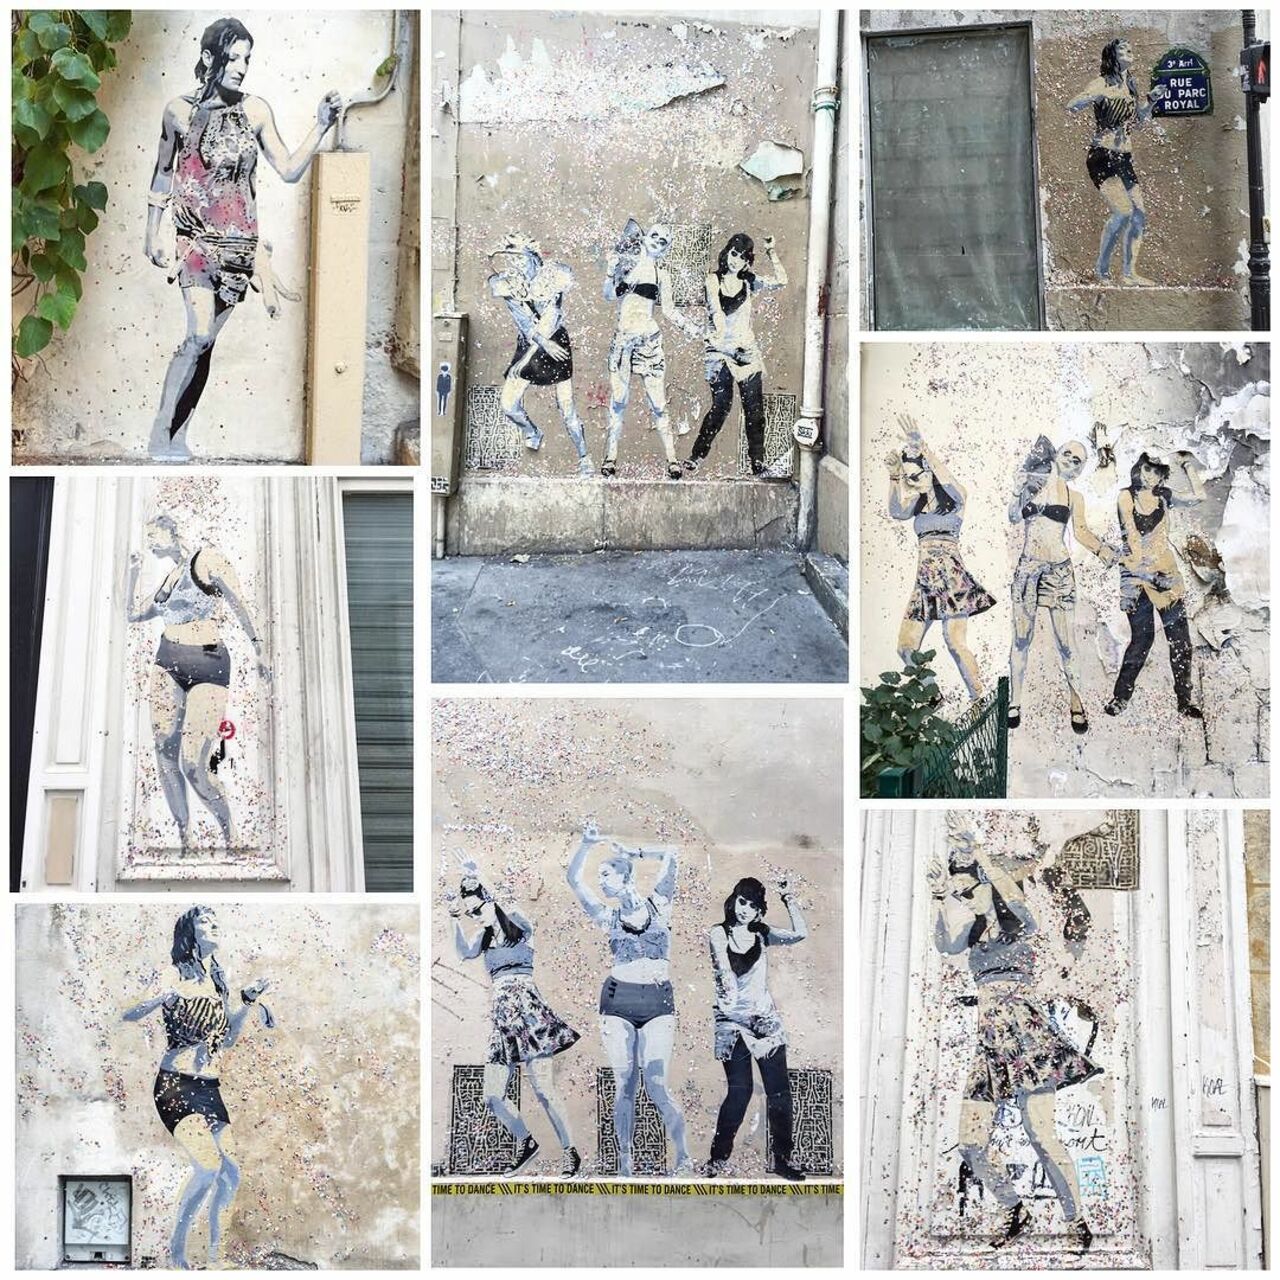 #Paris #graffiti photo by @martincoady http://ift.tt/1LvhsDZ #StreetArt https://t.co/HMBU3tci0P